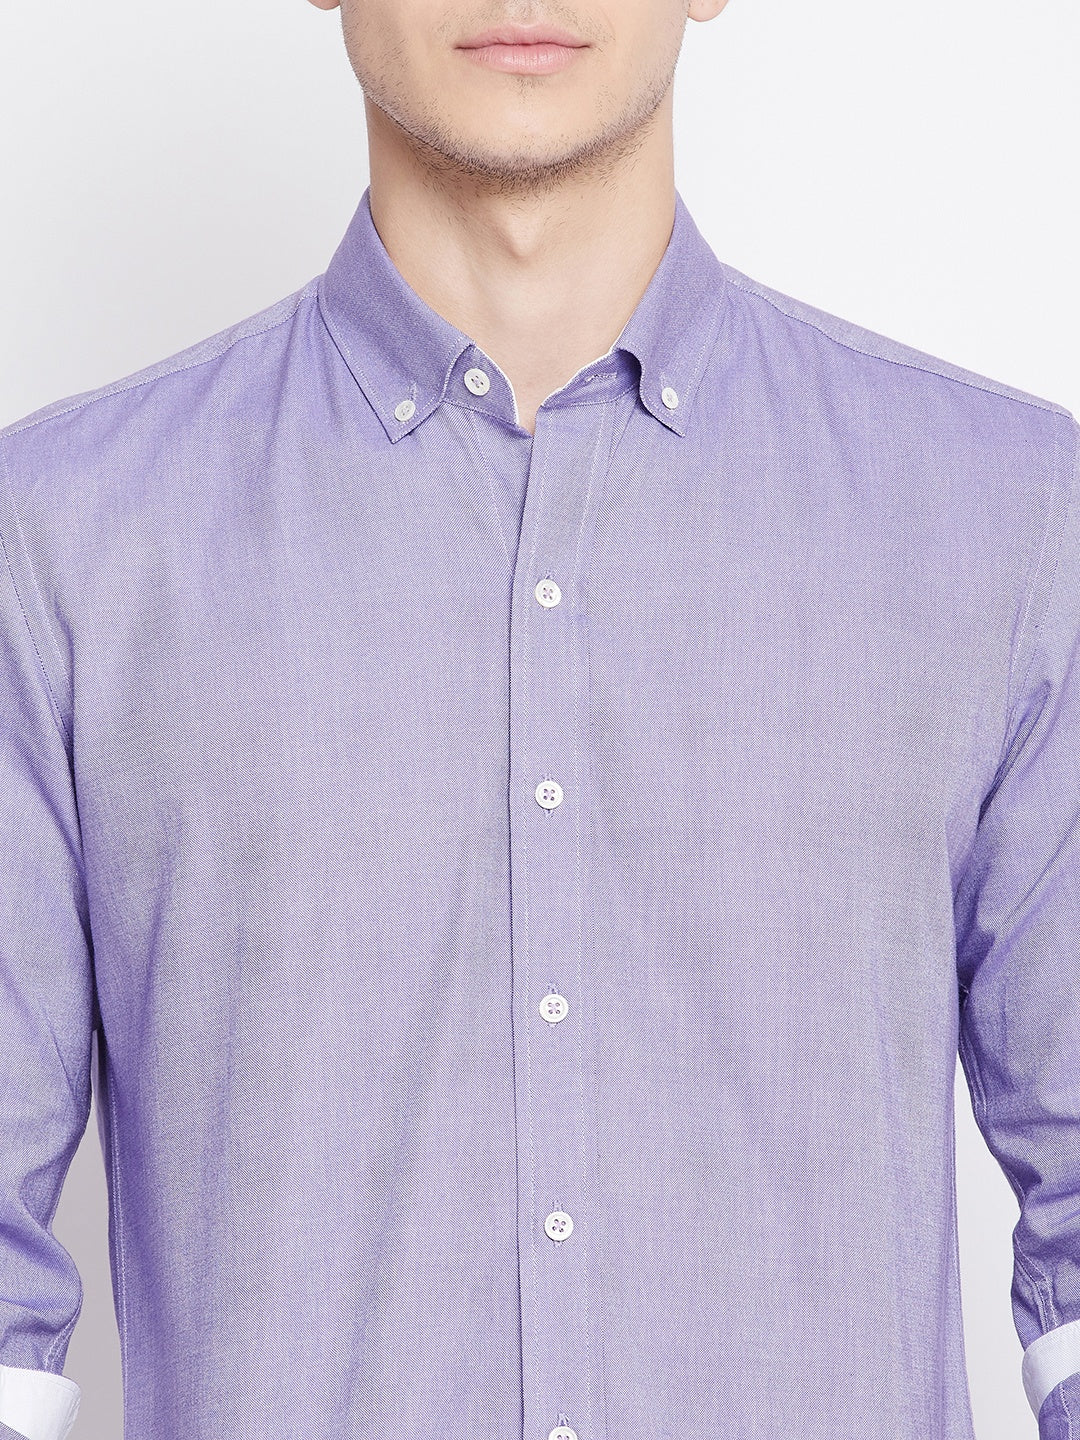 Medium Purple Oxford Cotton Shirt